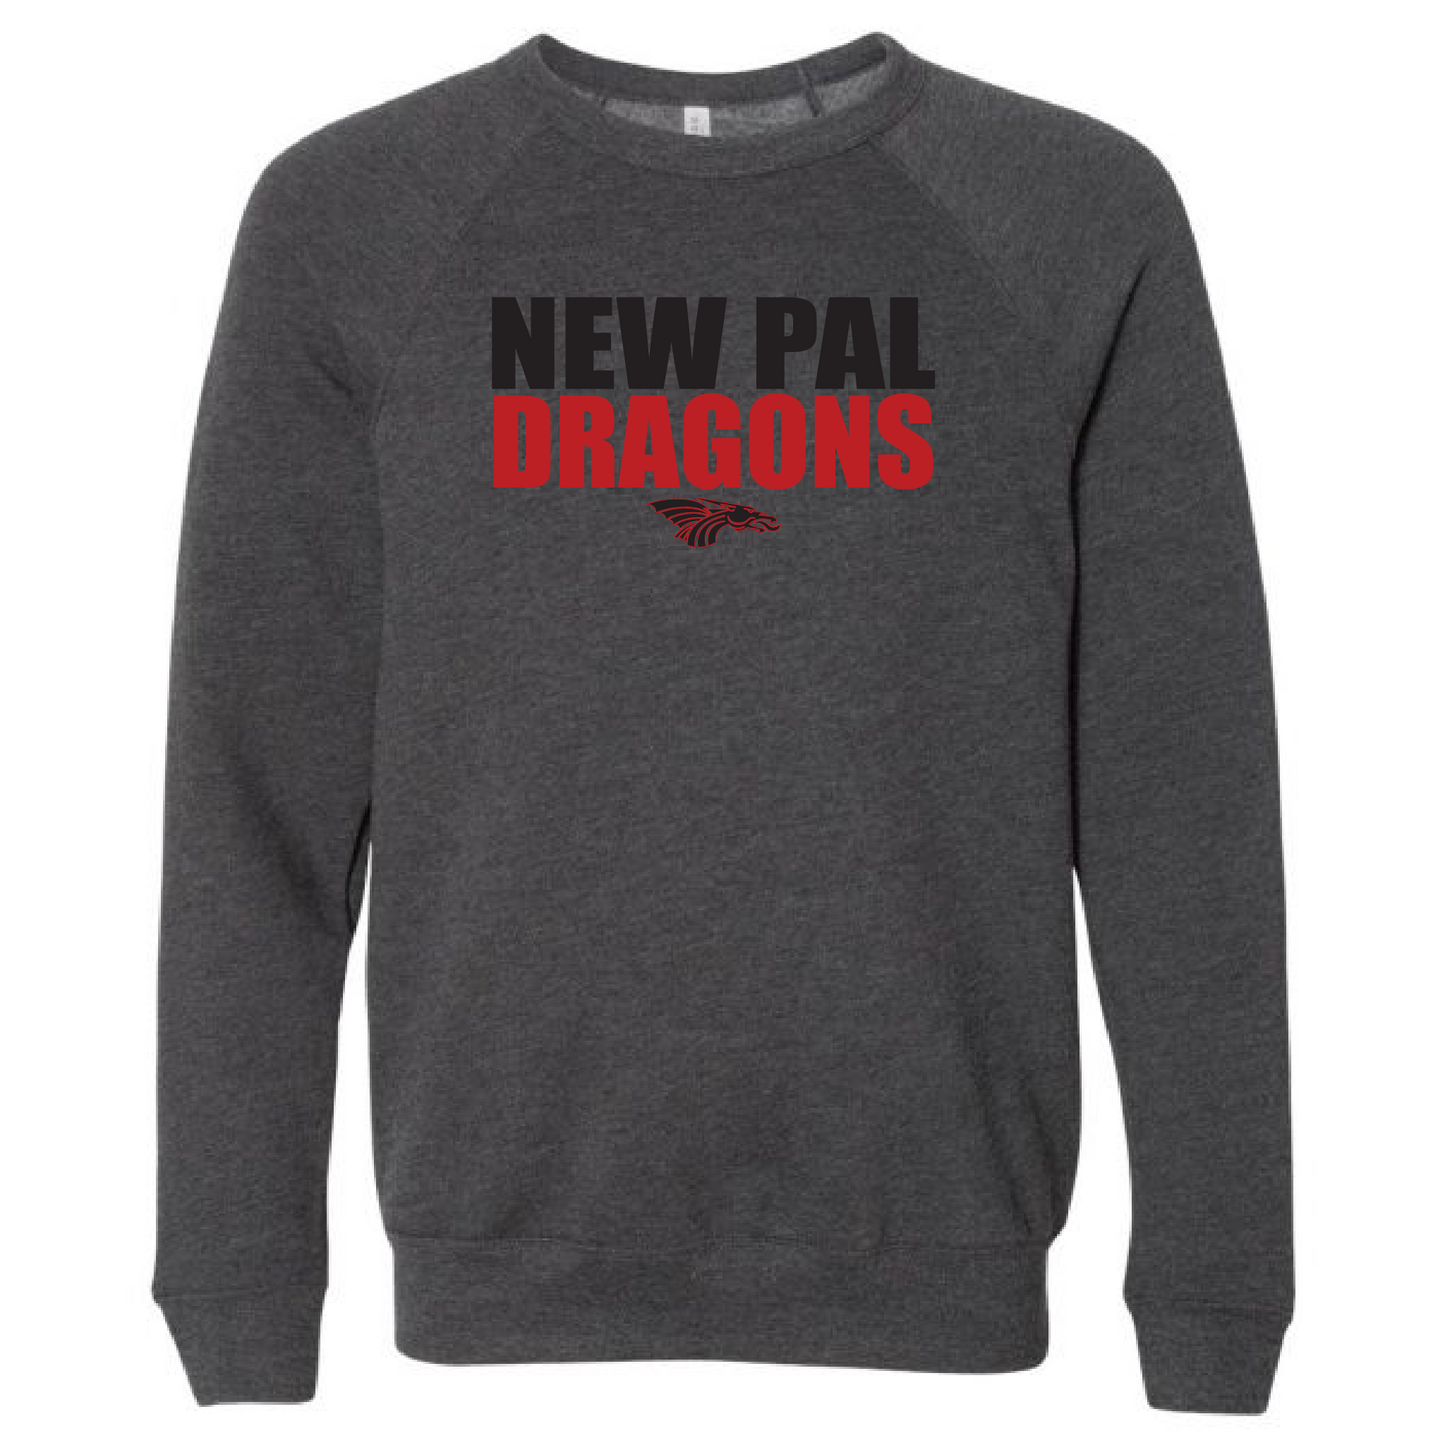 Unisex Sweatshirt - New Pal Dragons